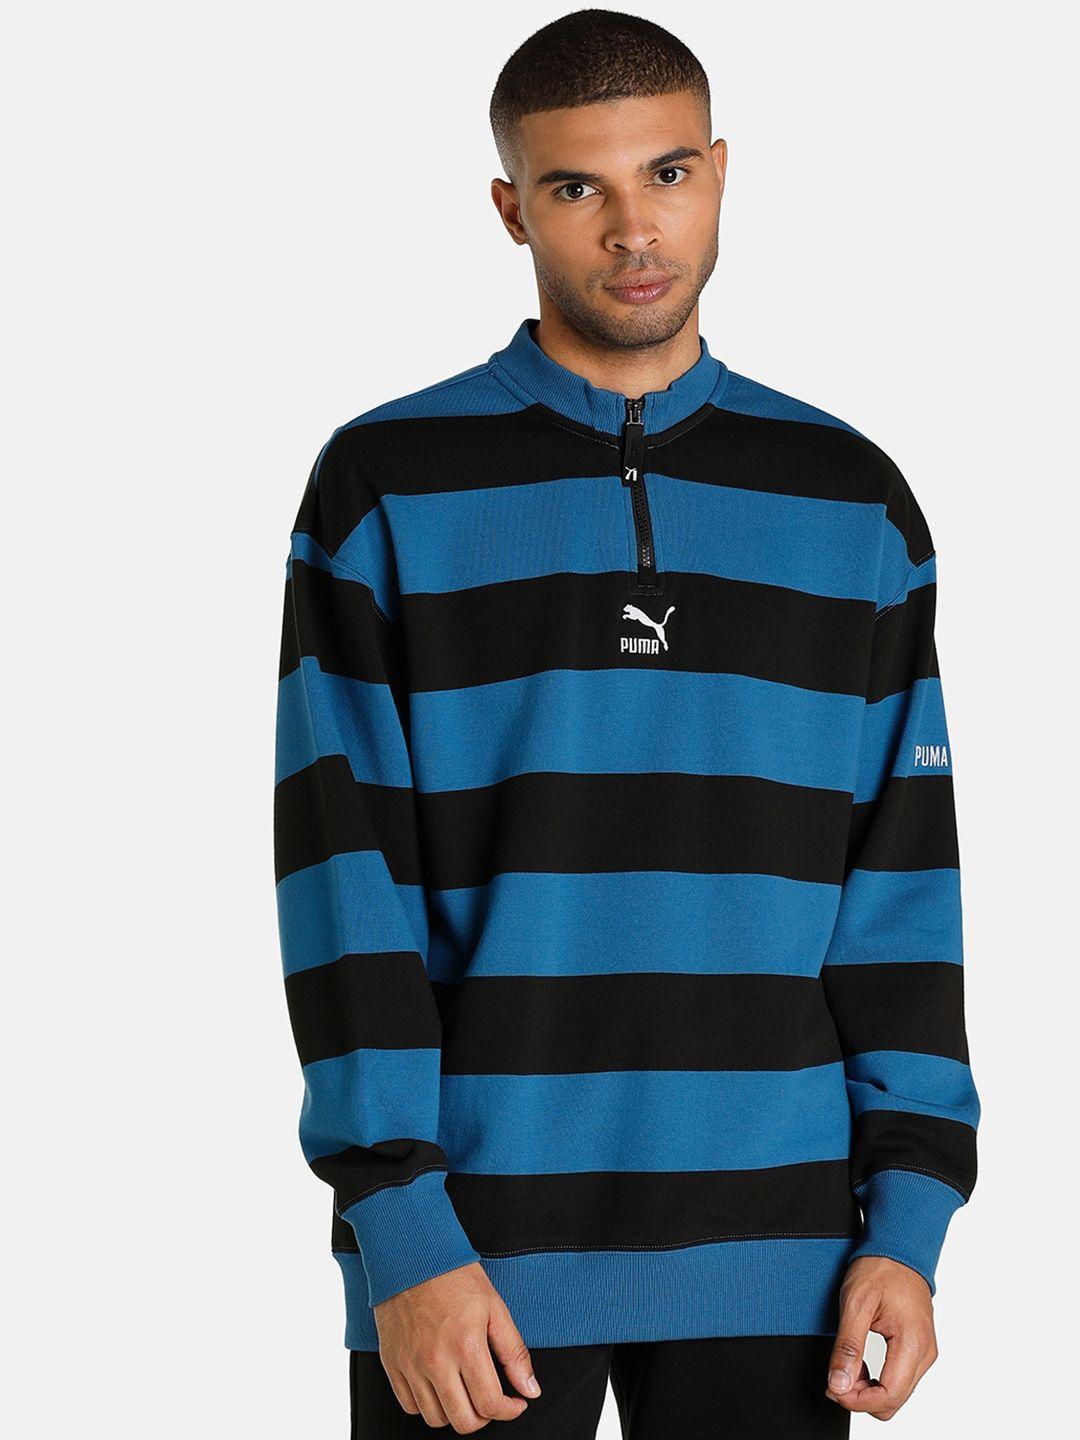 puma-men-blue-striped-cotton-sweatshirt